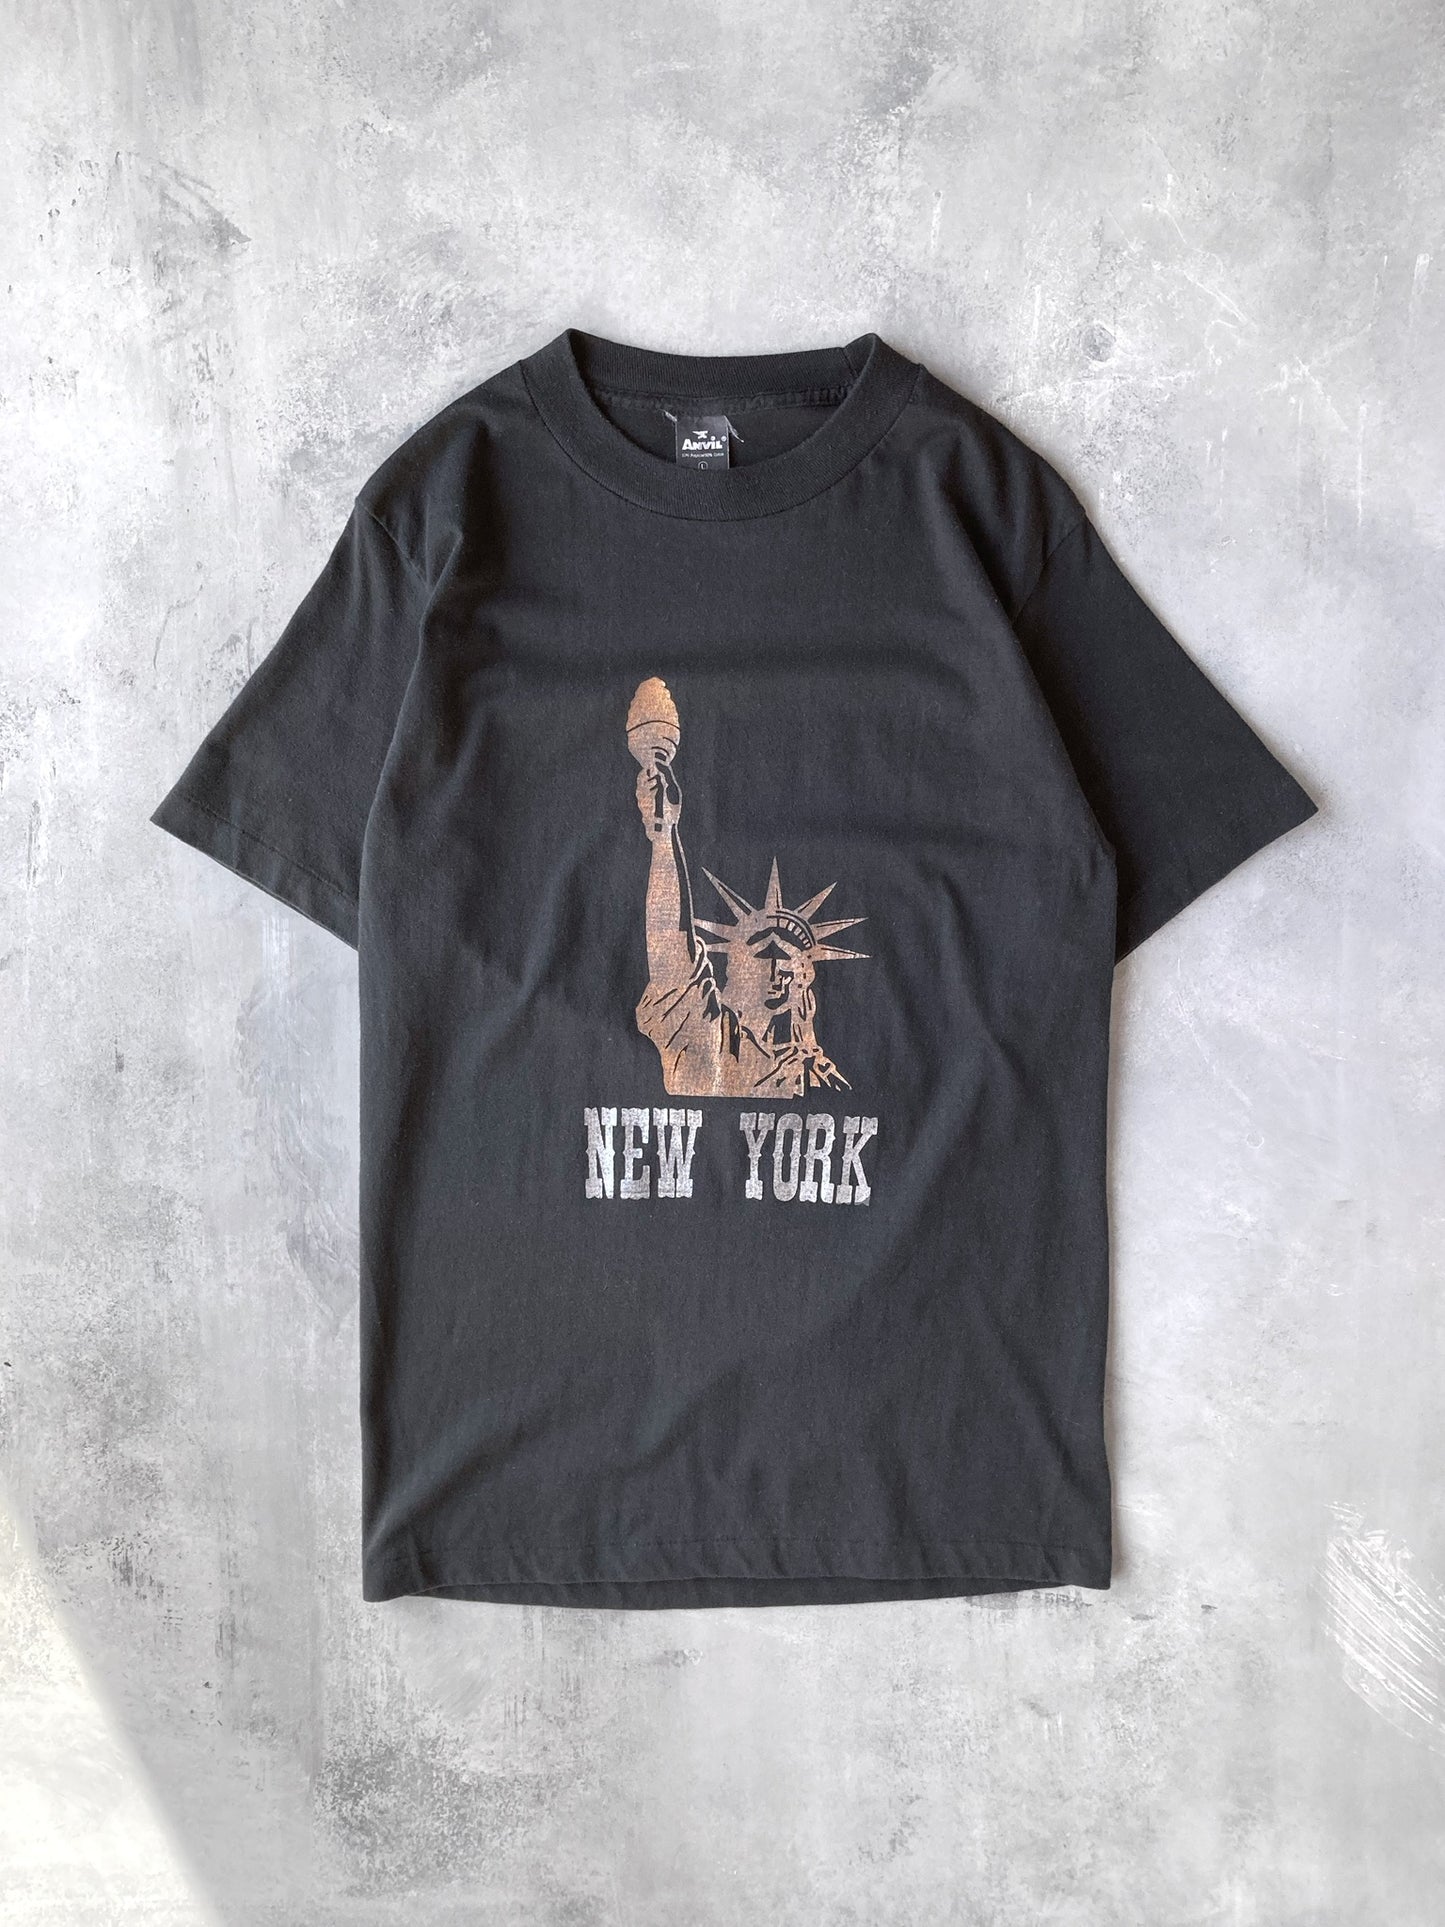 Statue of Liberty T-Shirt 80's - Small / Medium